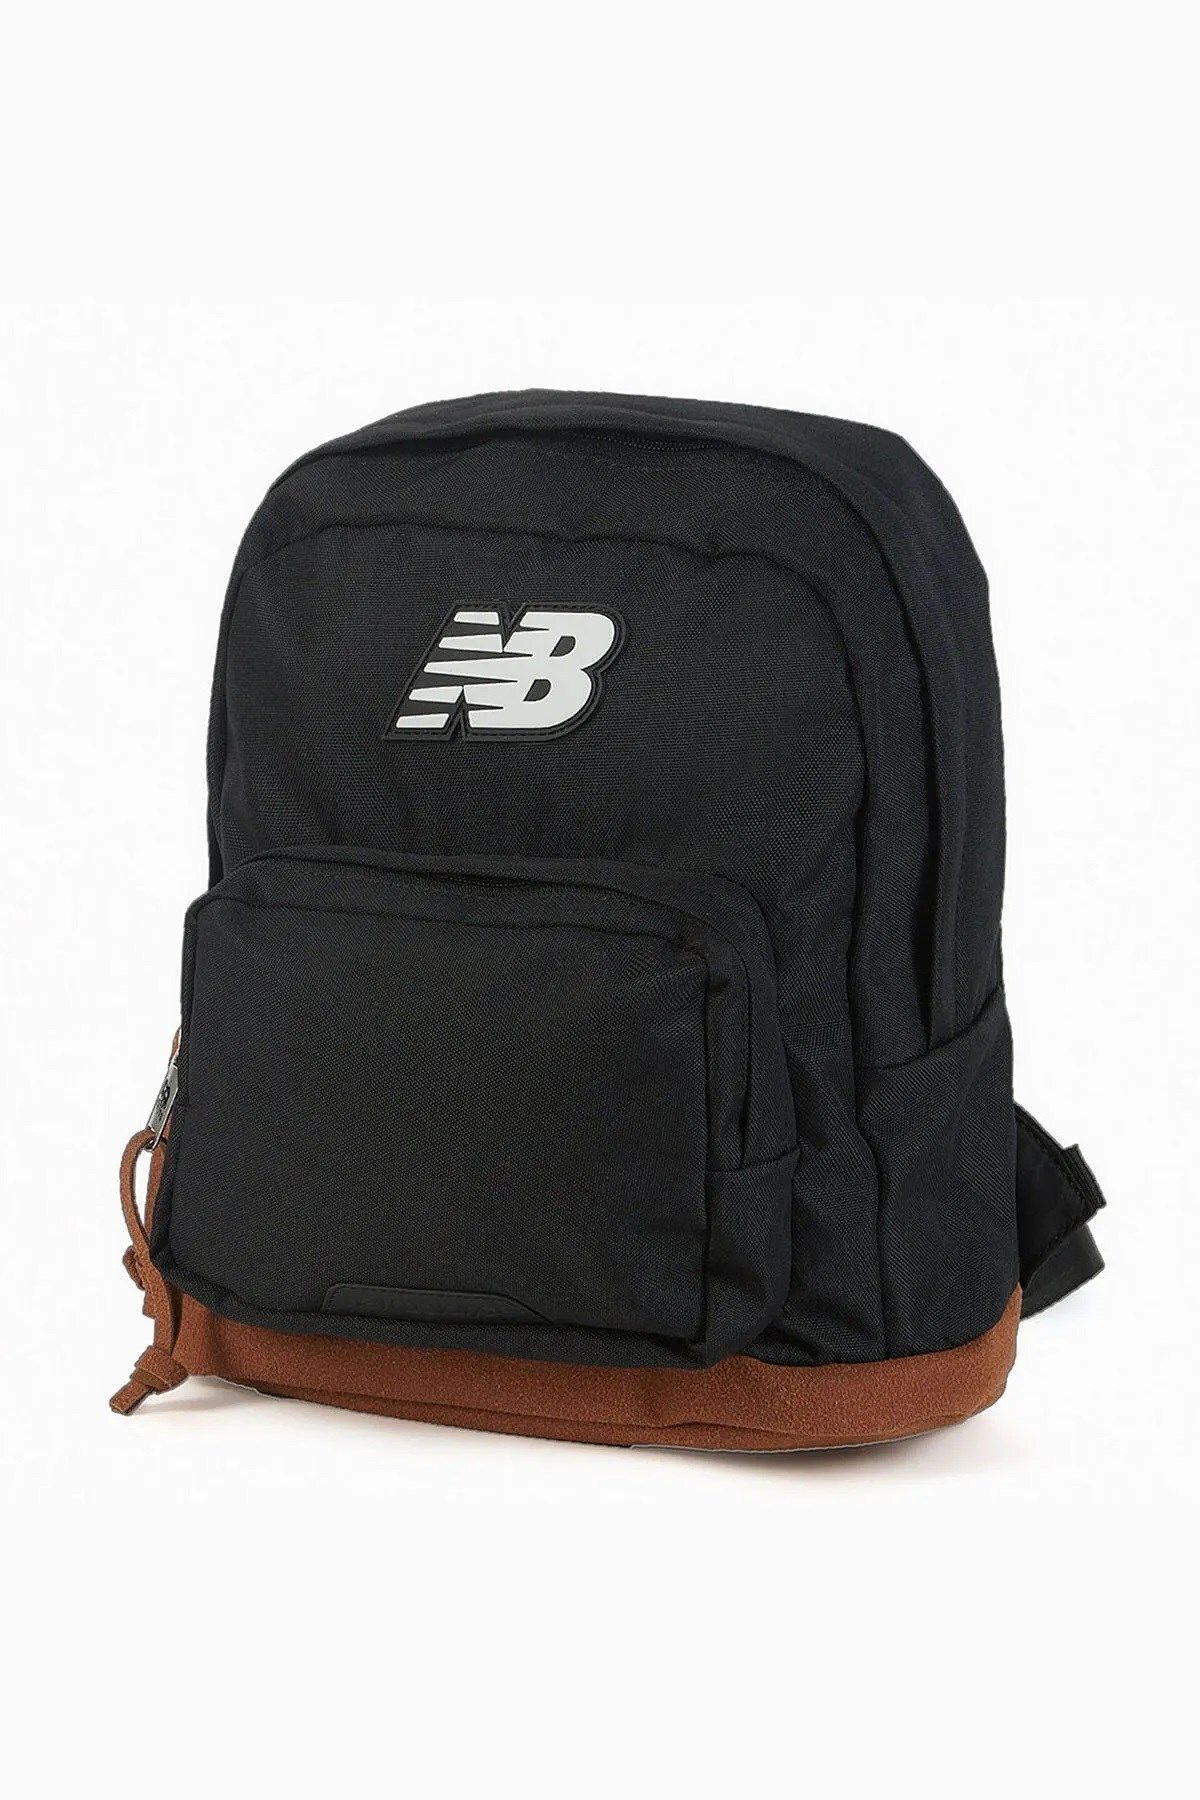 New Balance Mini Backpack Çanta